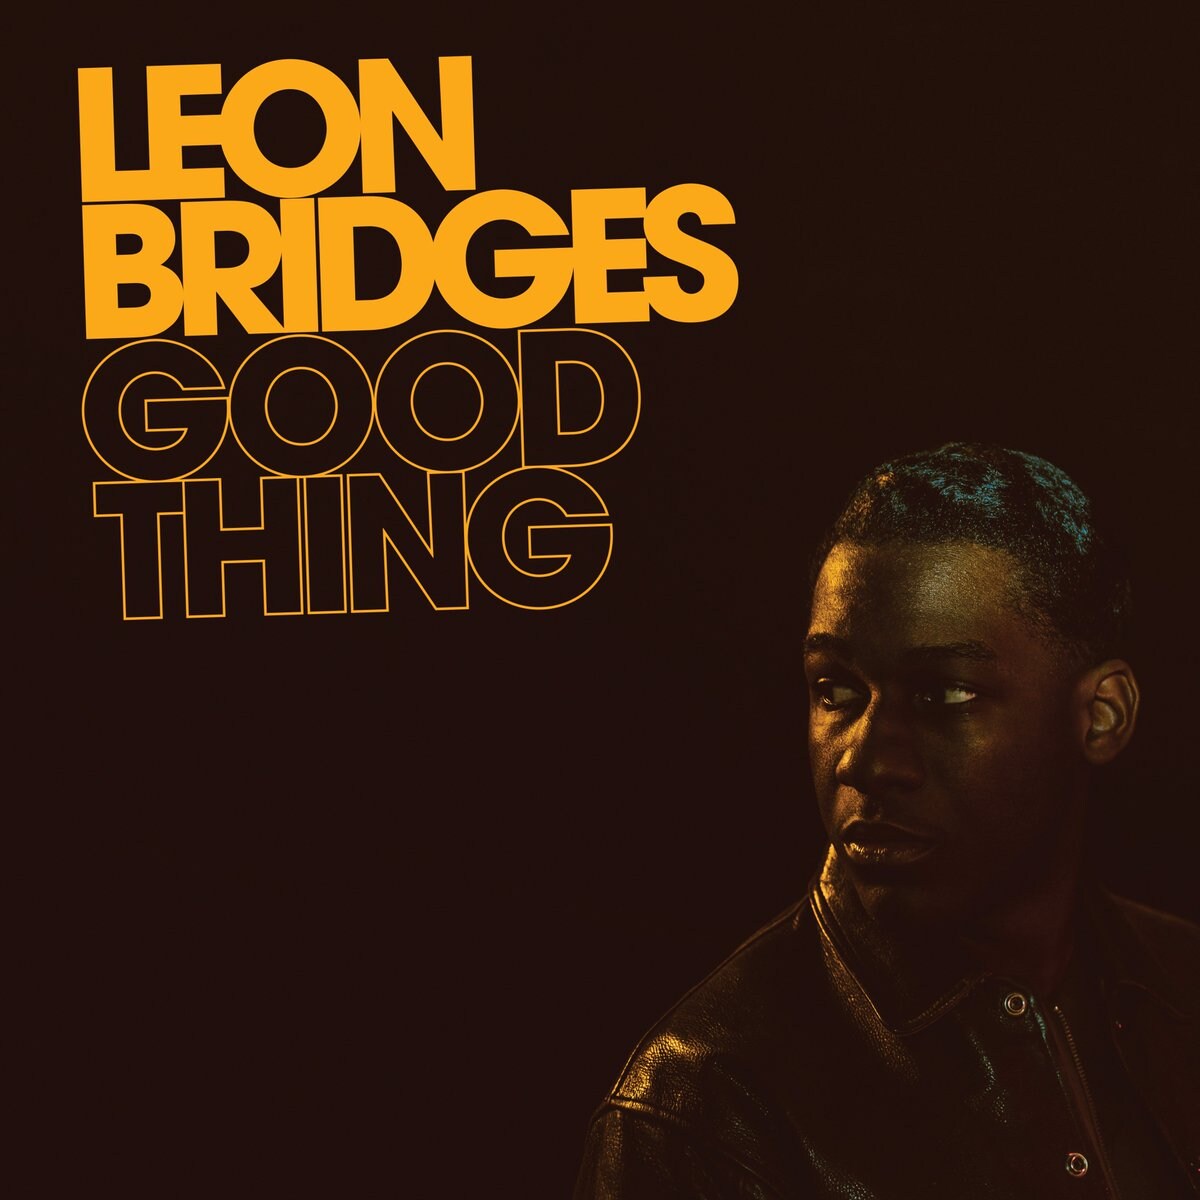 2. Leon Bridges - Good Thing